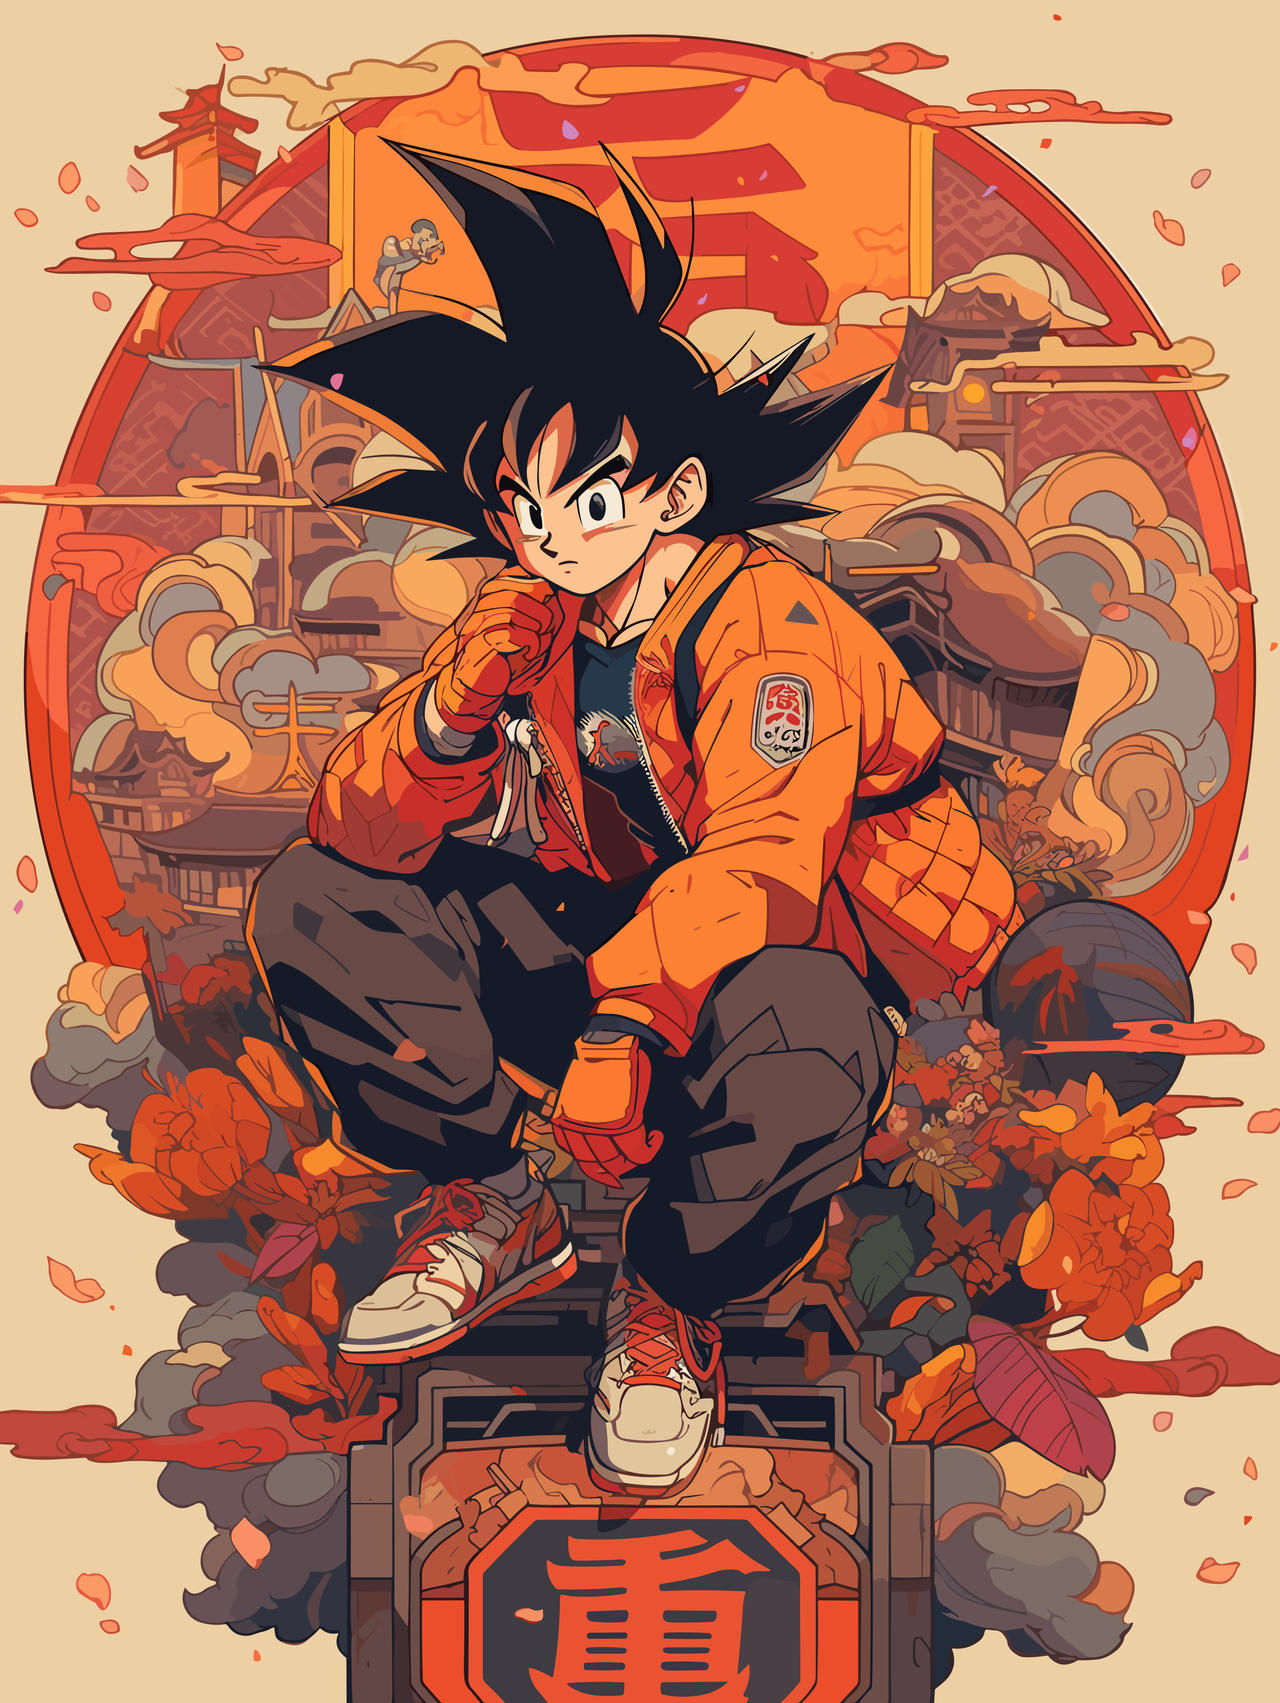 Dragon Ball Goku Aesthetic Orange Wallpaper - DBZ Wallpaper HD